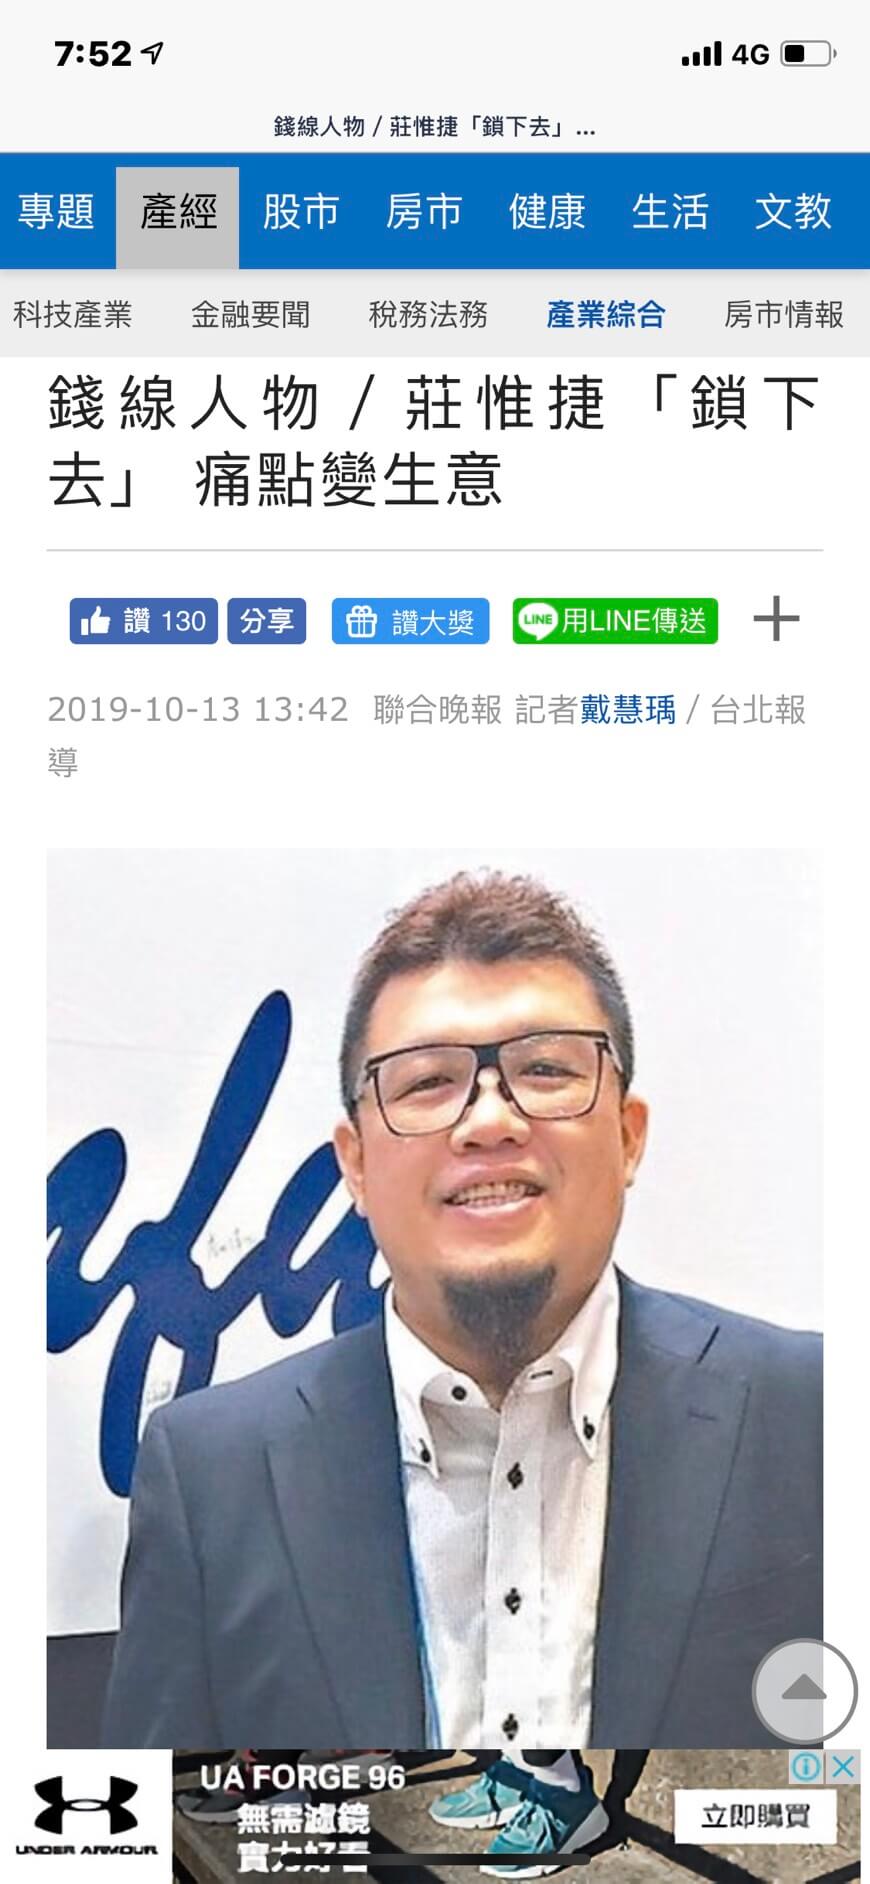 CEO of Chienfu Sloky-1